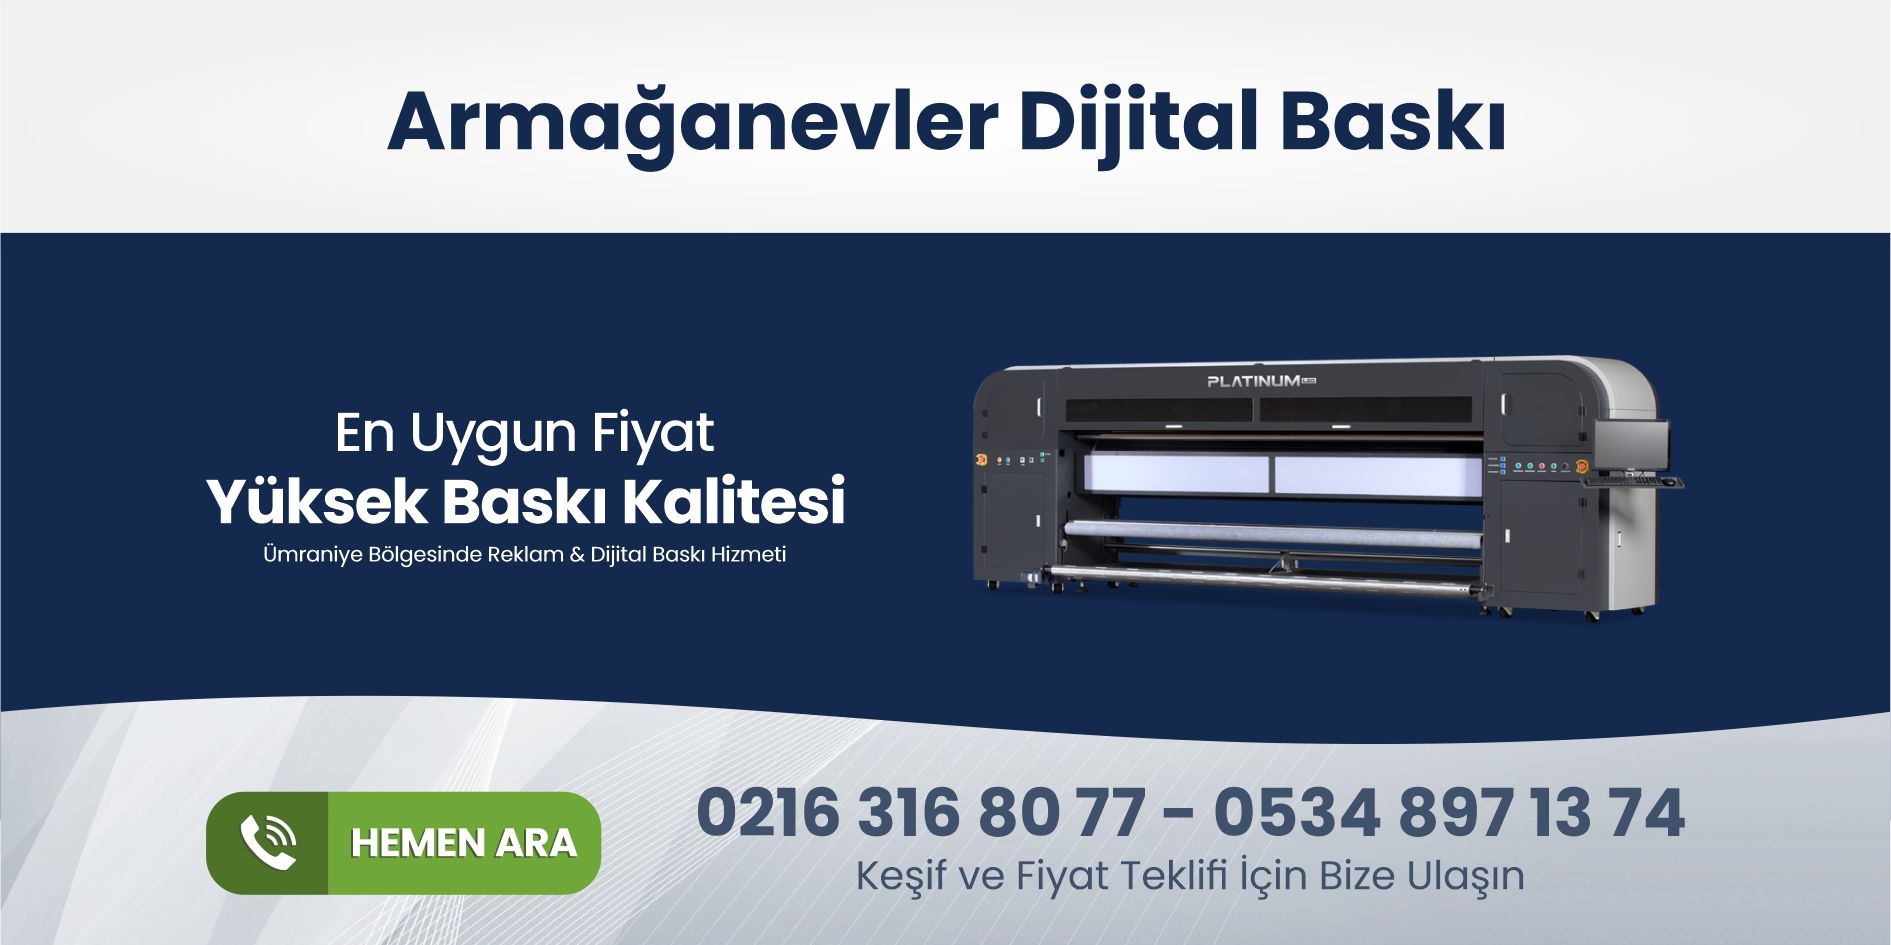 You are currently viewing Armağanevler Dijital Baskı